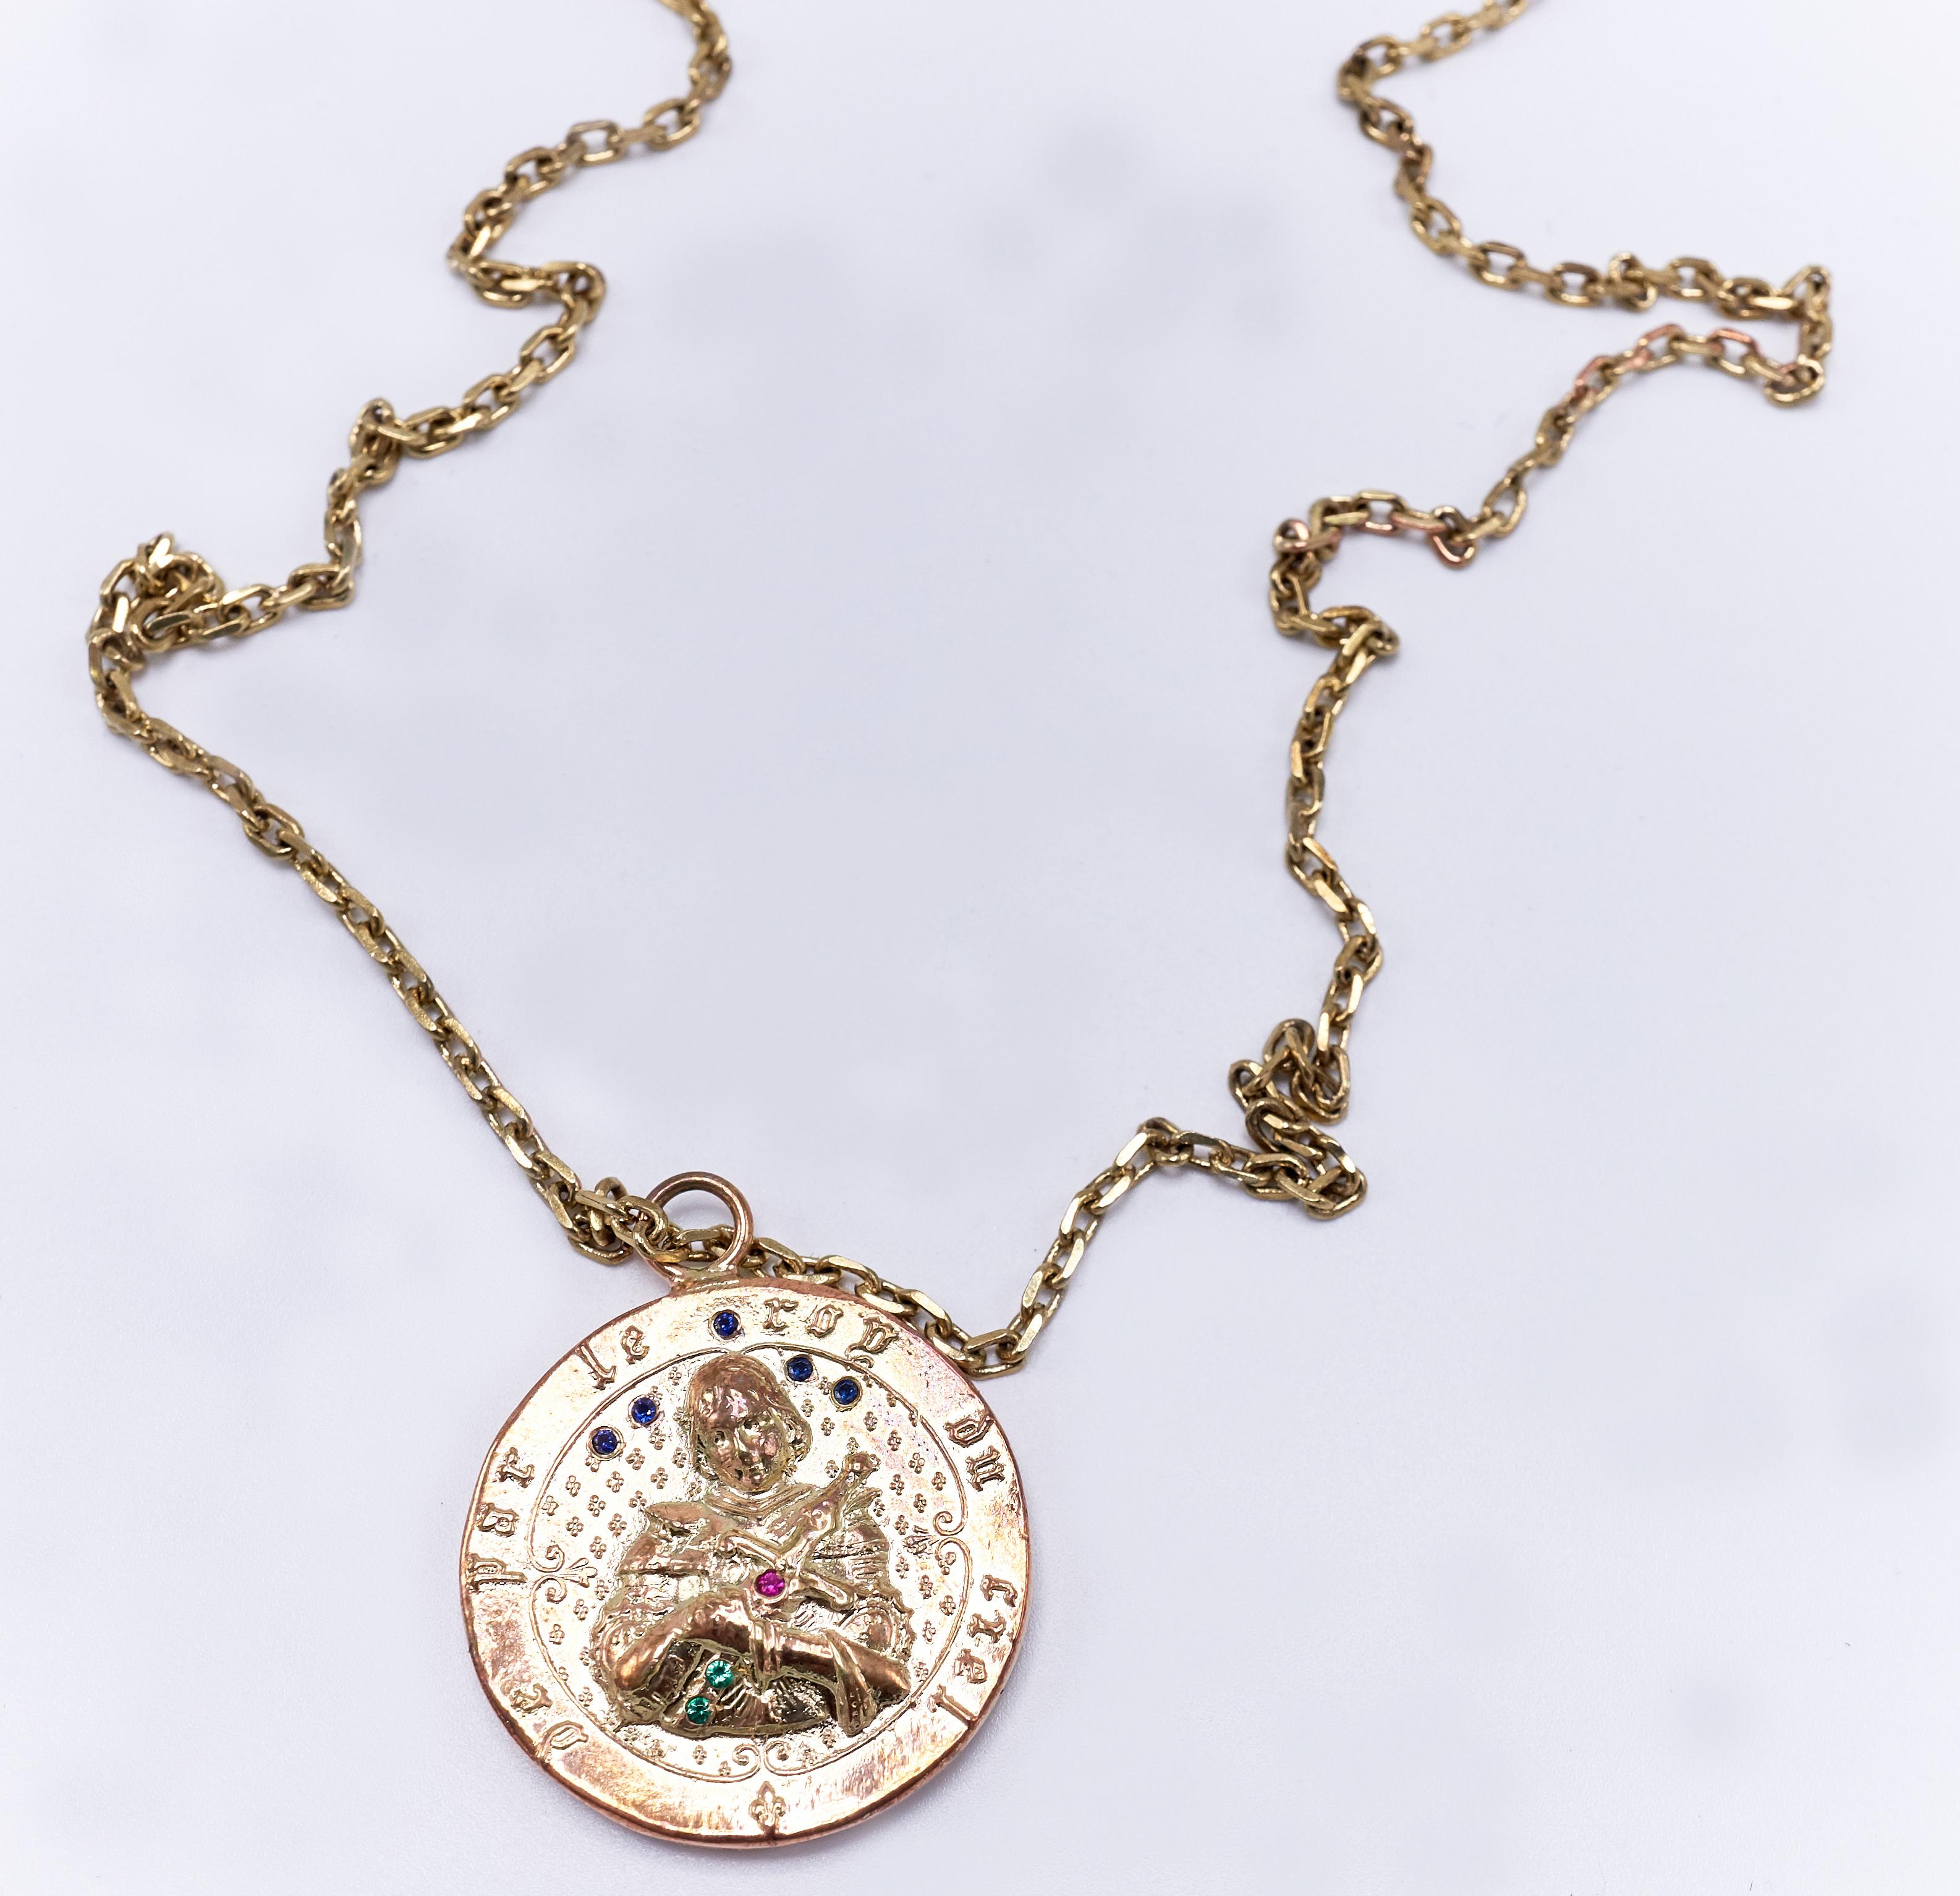 joan of arc pendant necklace